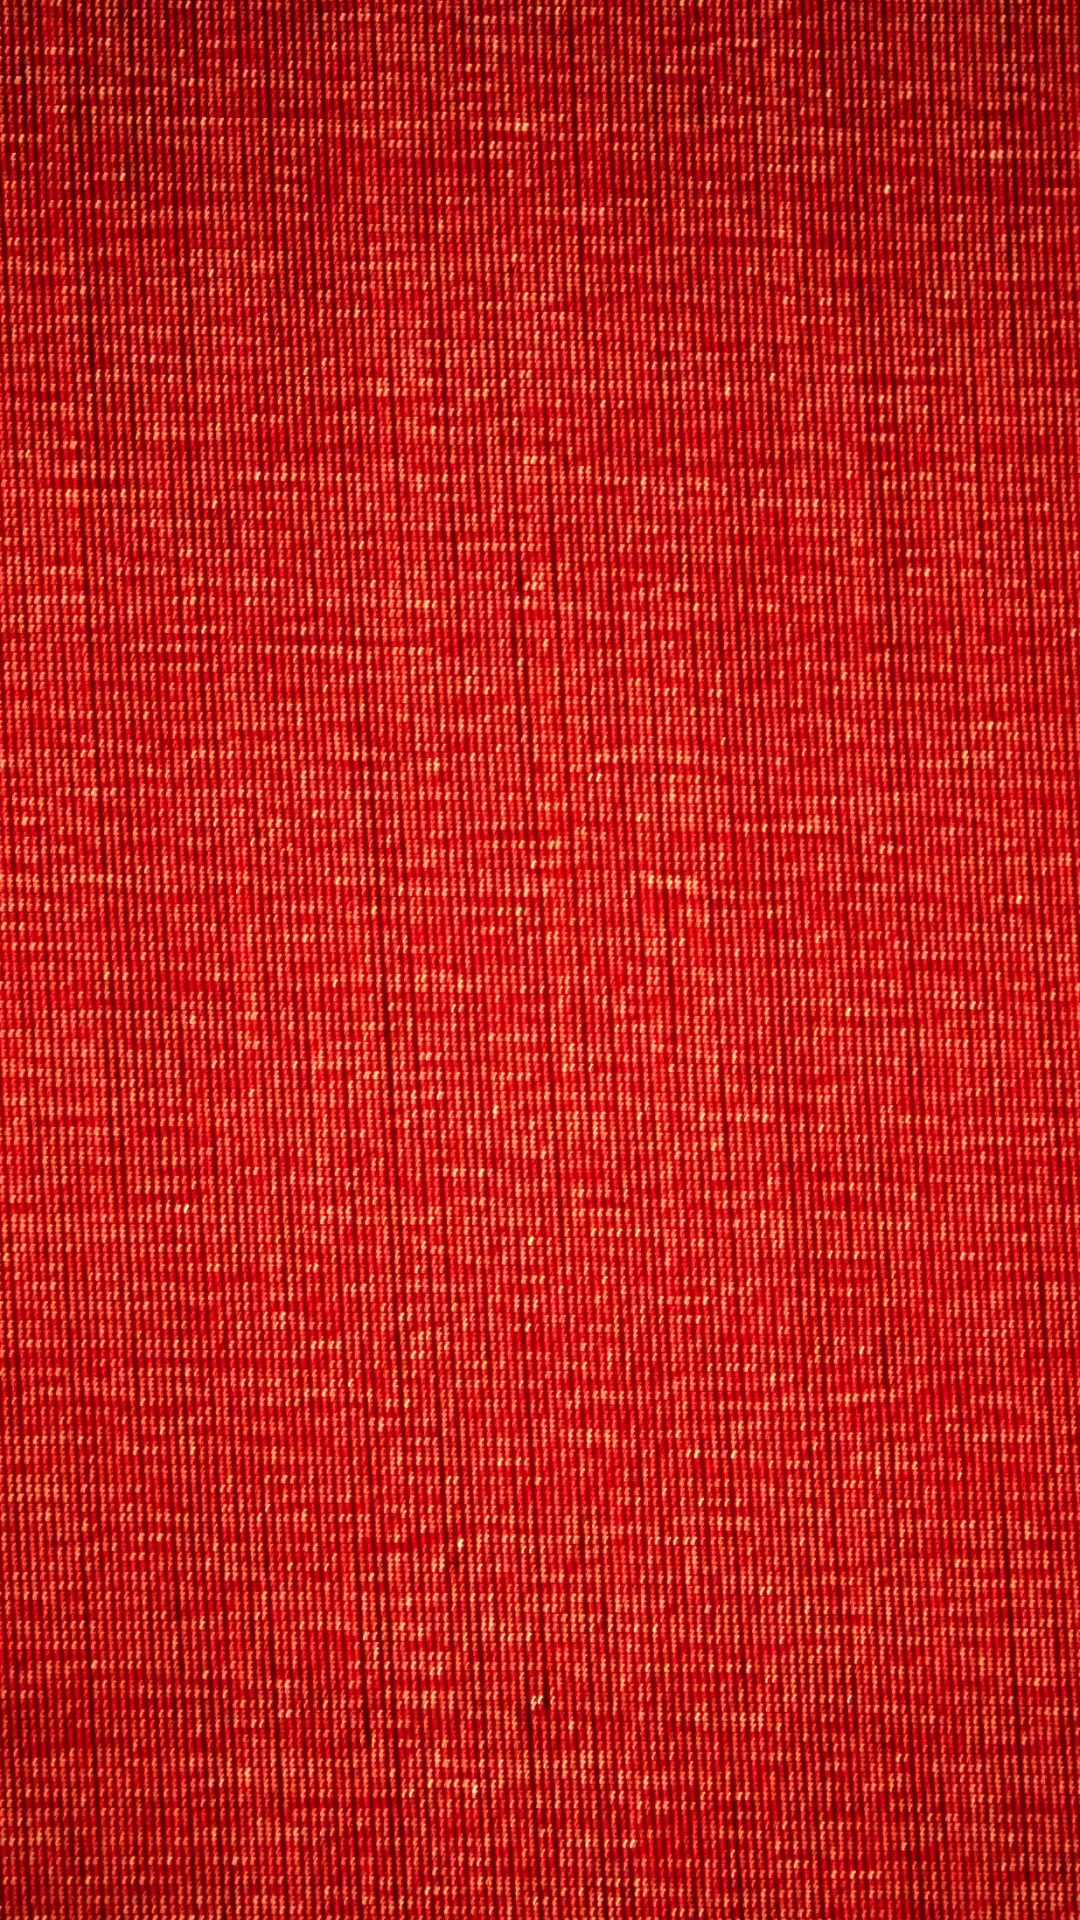 Textil Rojo en la Imagen de Cerca. Wallpaper in 1080x1920 Resolution